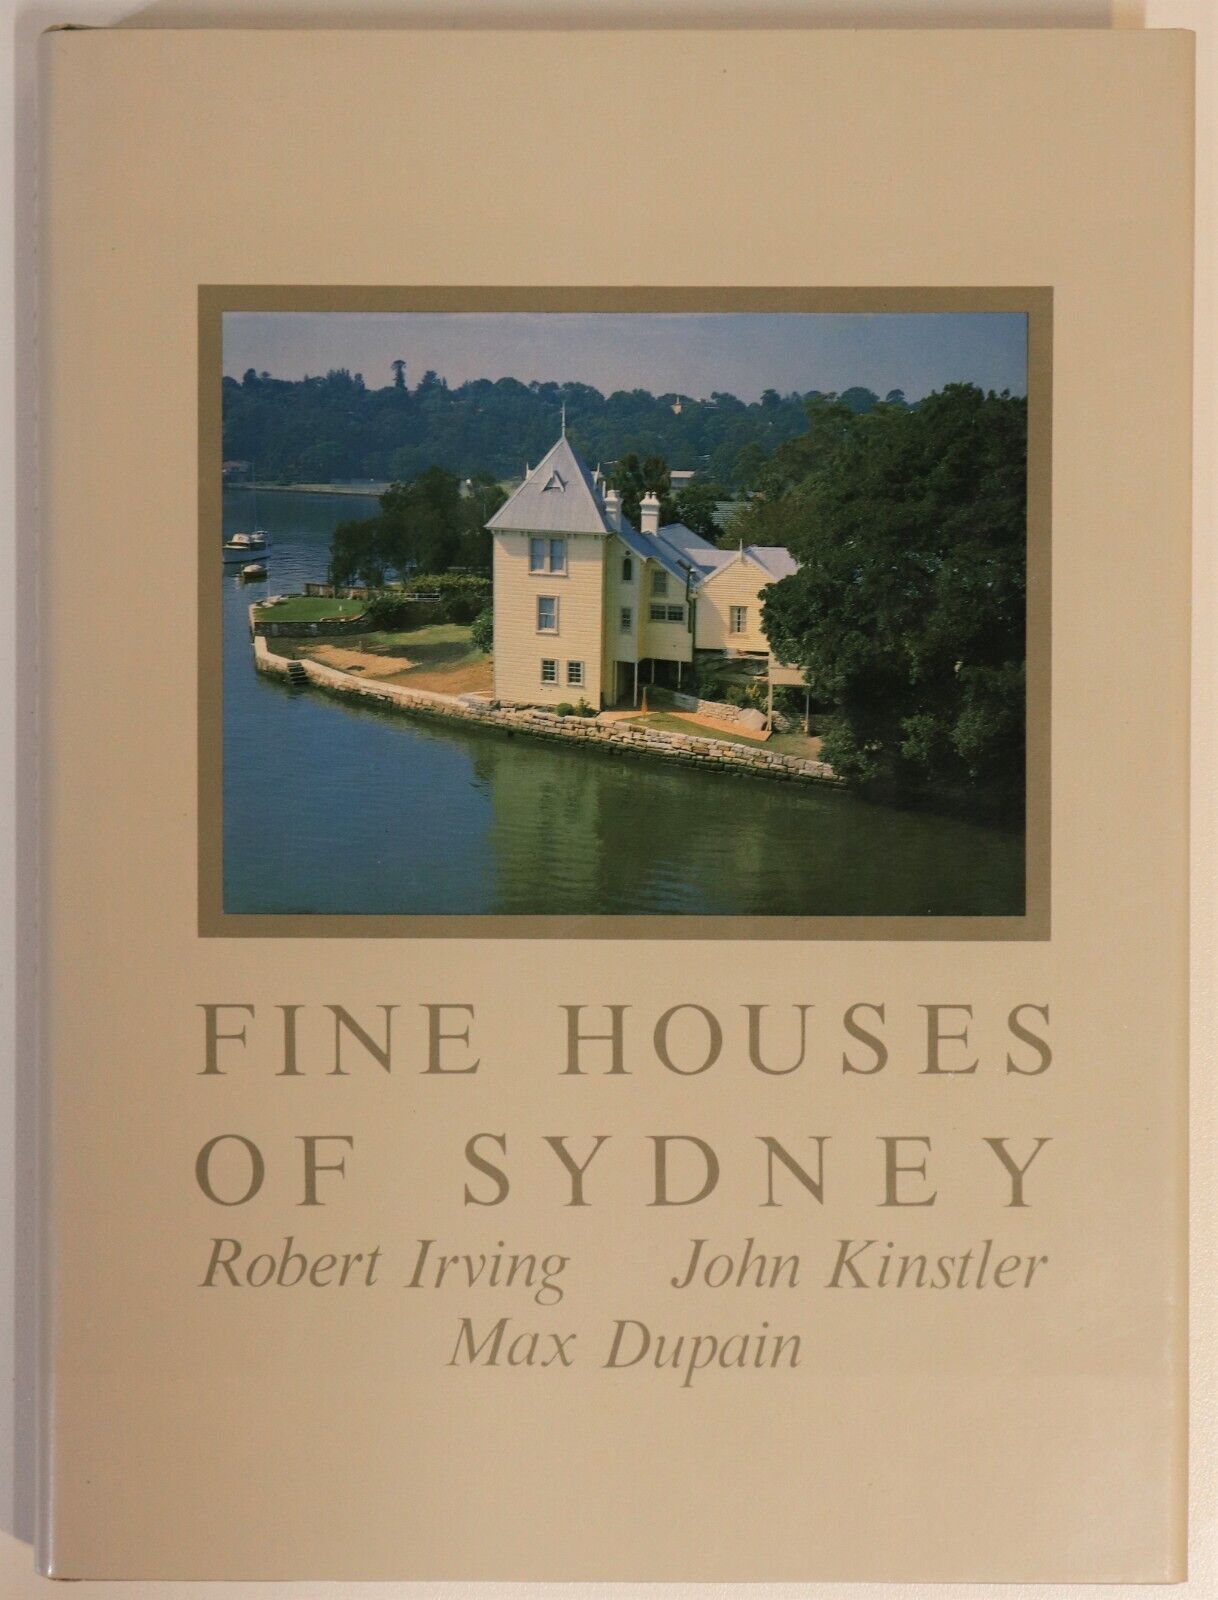 Fine Houses Of Sydney - 1982 - 1st Edition Australian Architecture Book